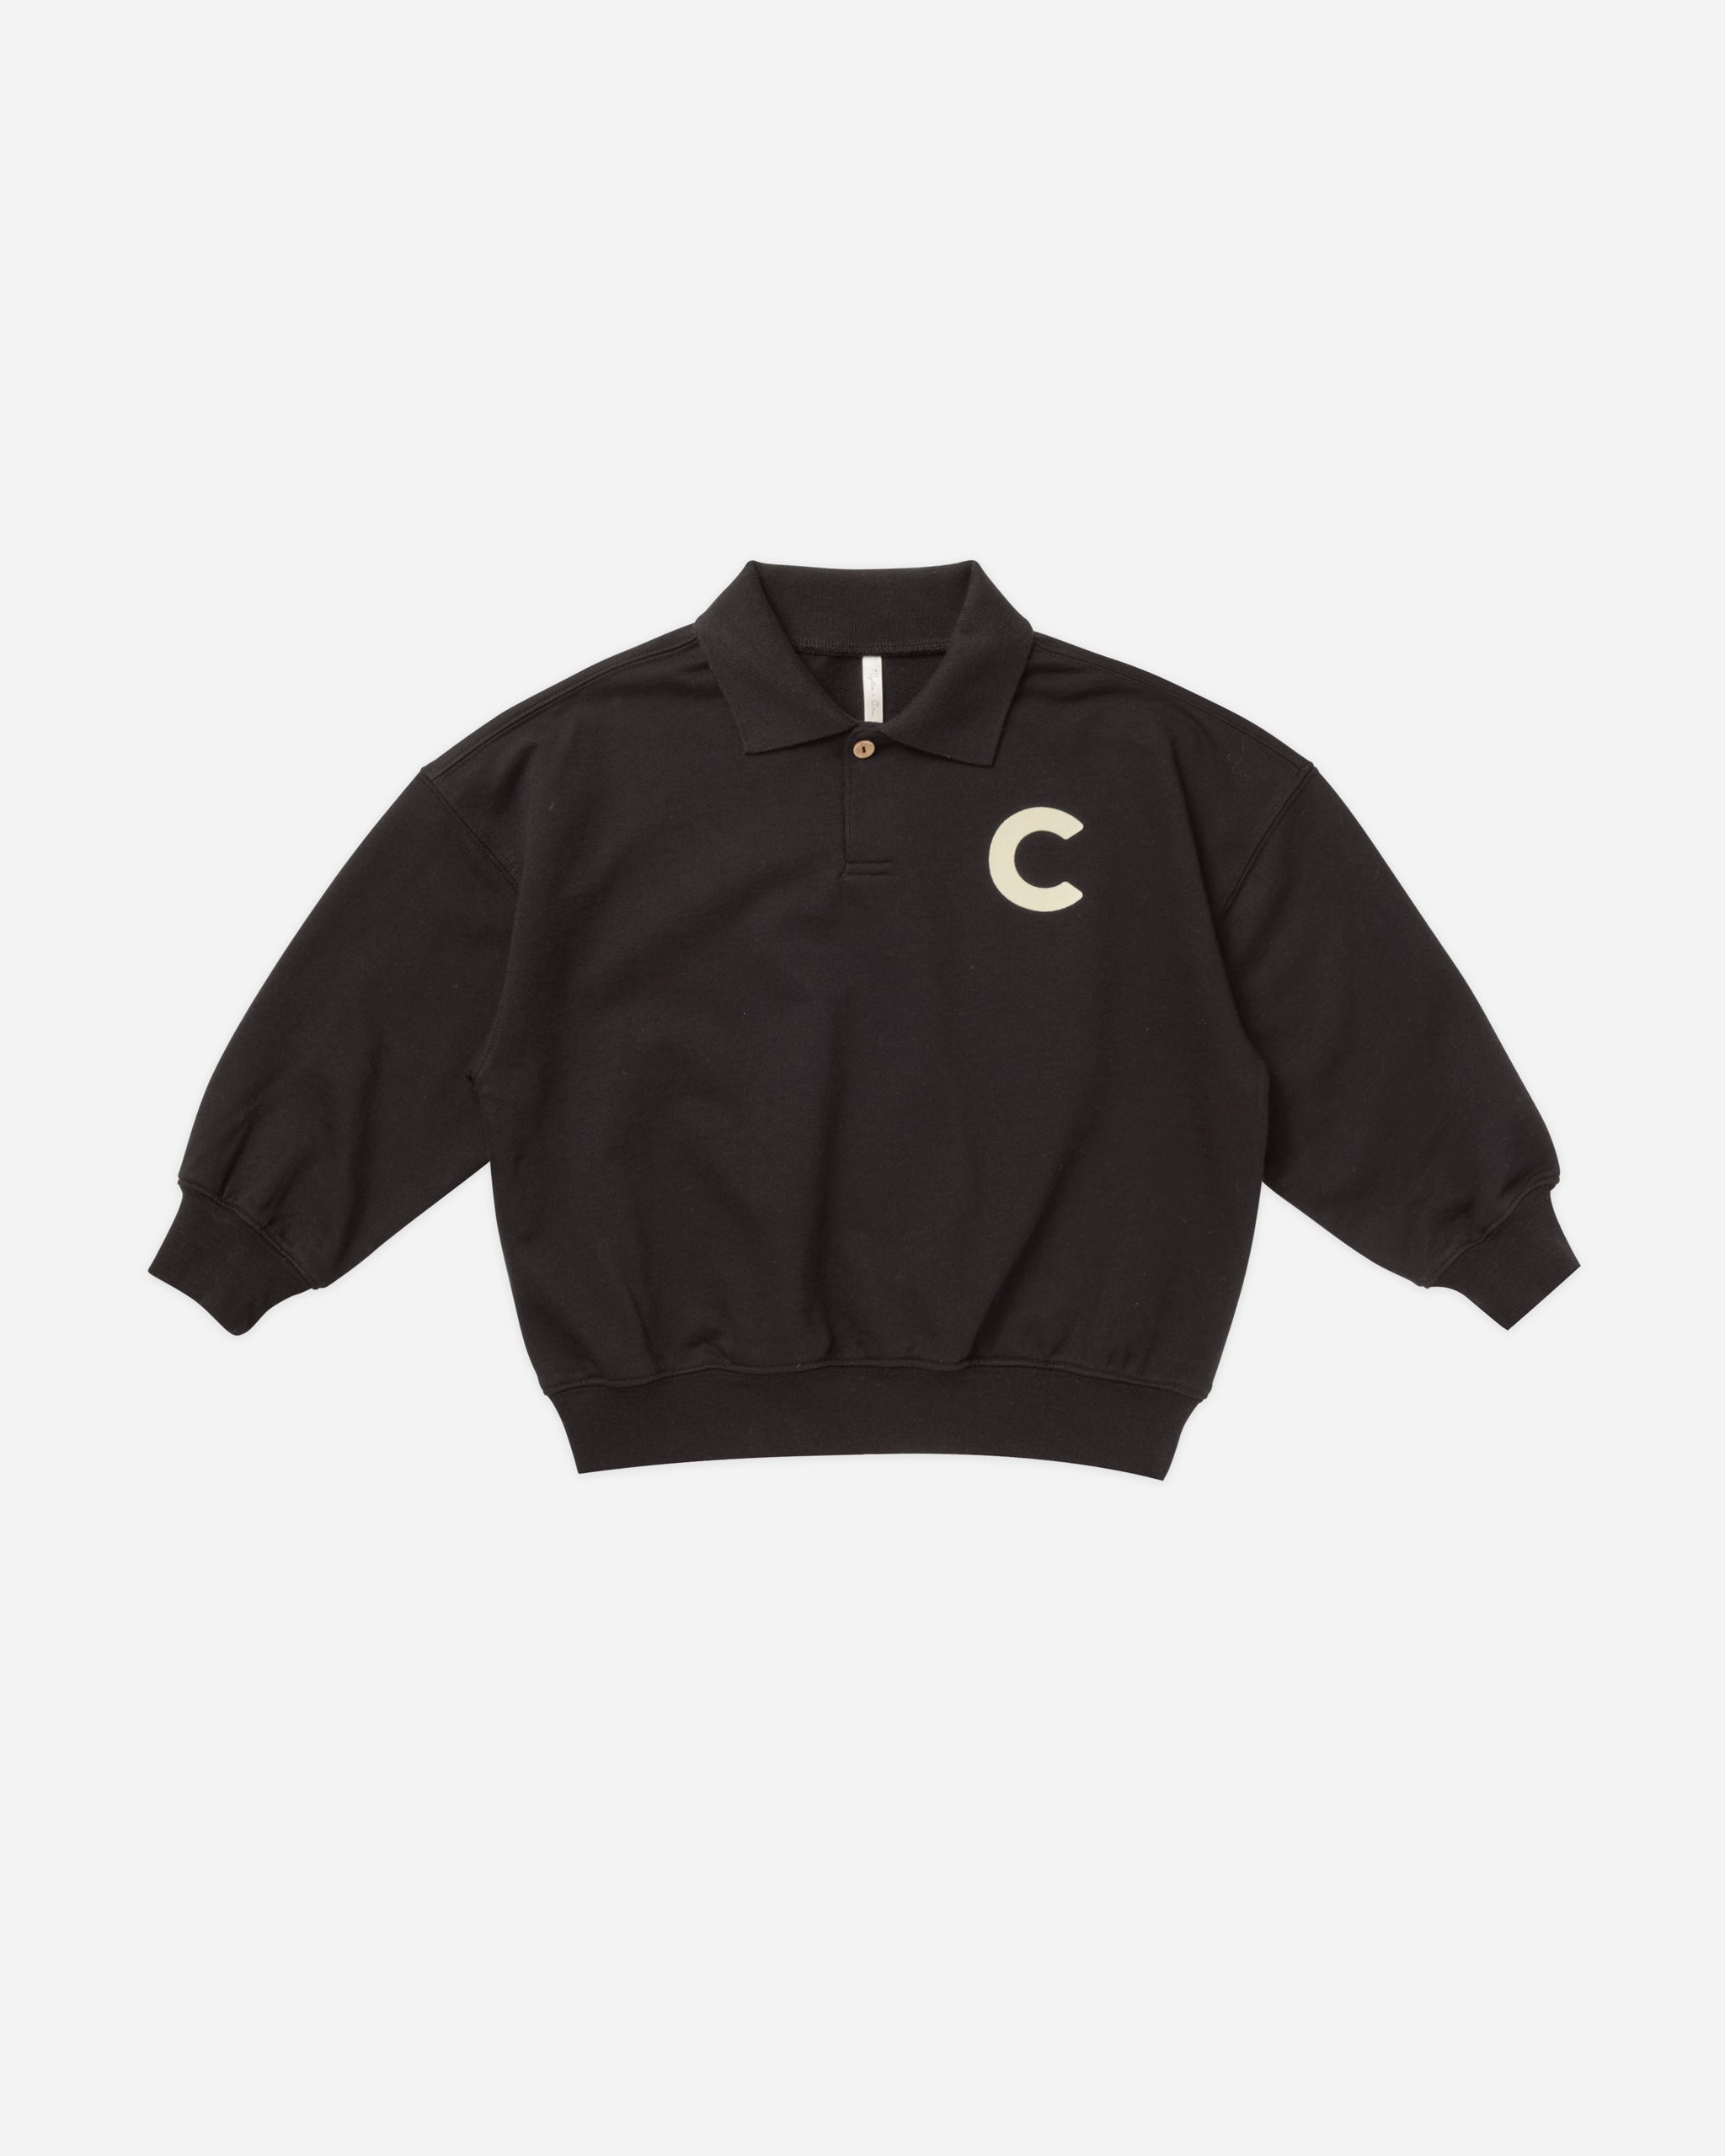 Collared Sweatshirt || Black